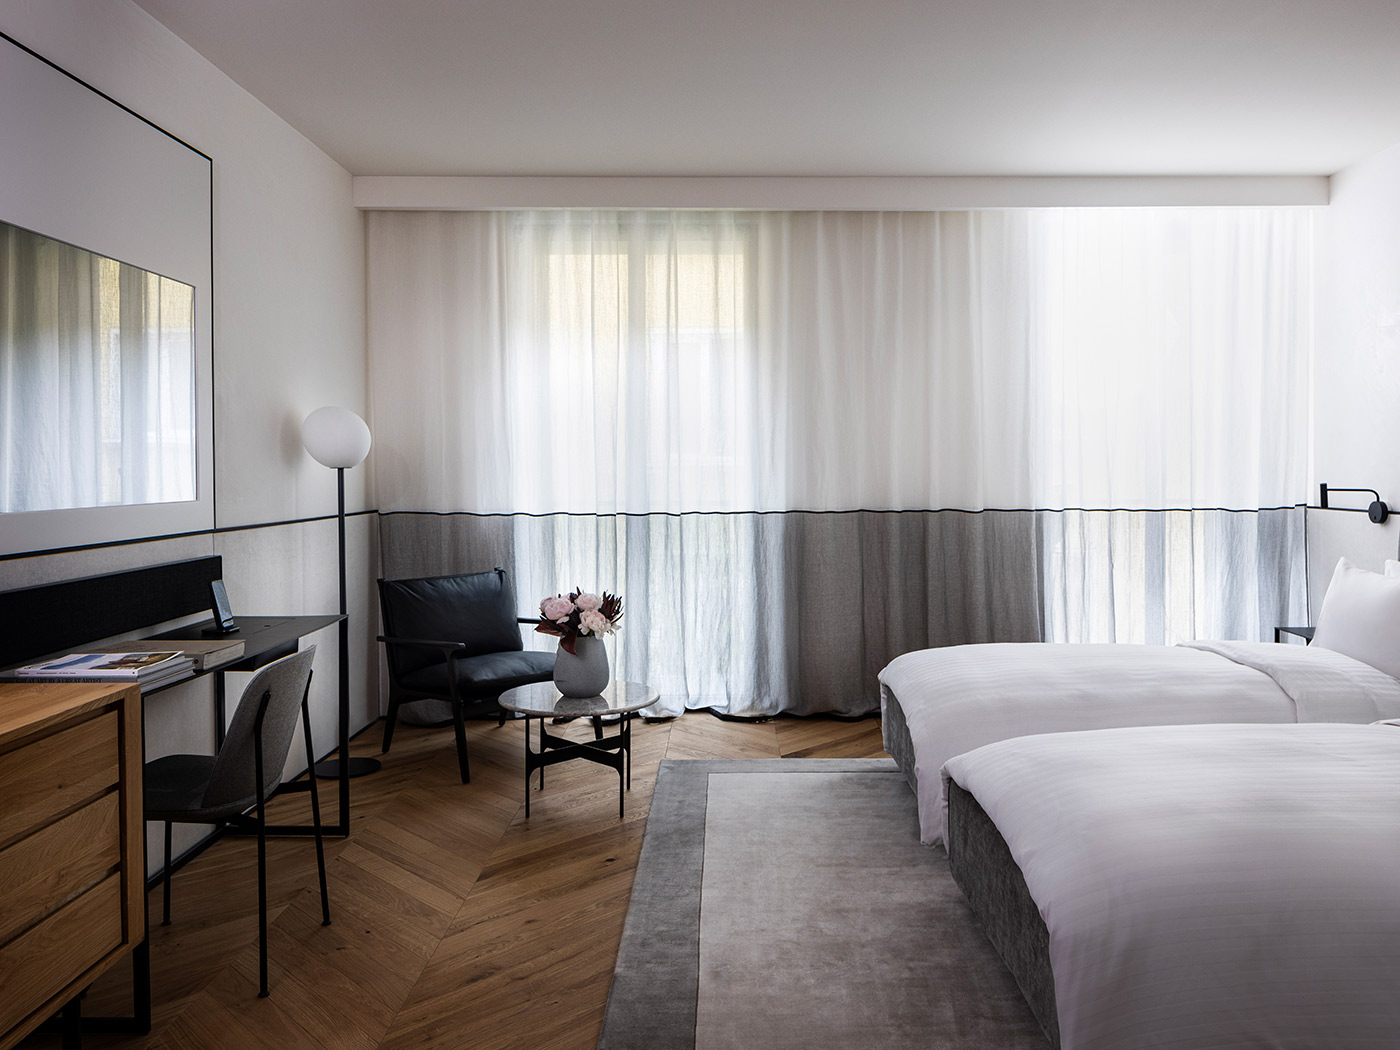 INX Design Hotel Rooms: Pictures & Reviews - Tripadvisor